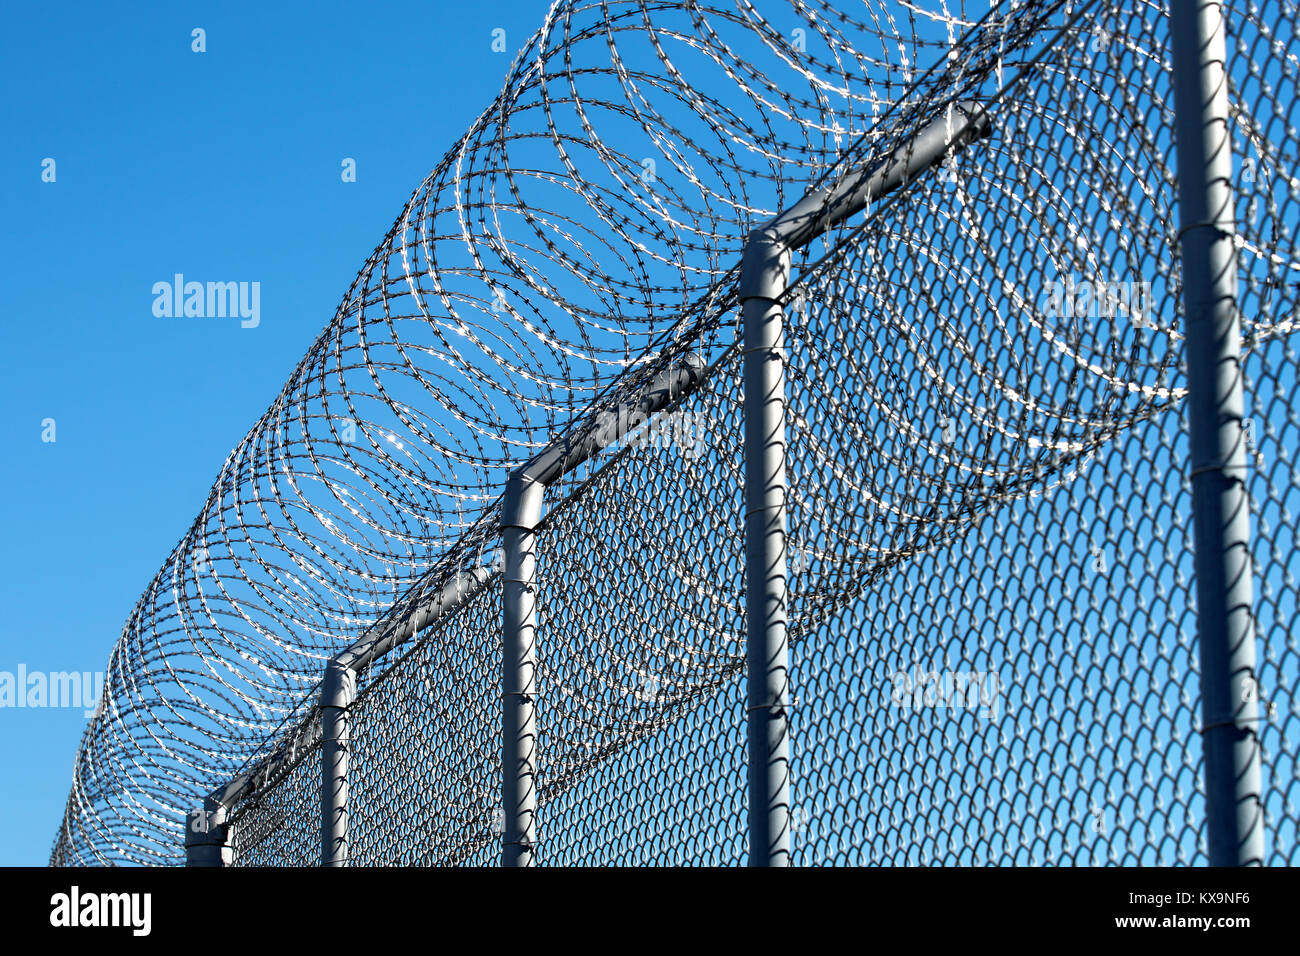 Gefängnis Stacheldraht zaun. Credit: Mario Beauregard/Alamy leben Nachrichten Stockfoto